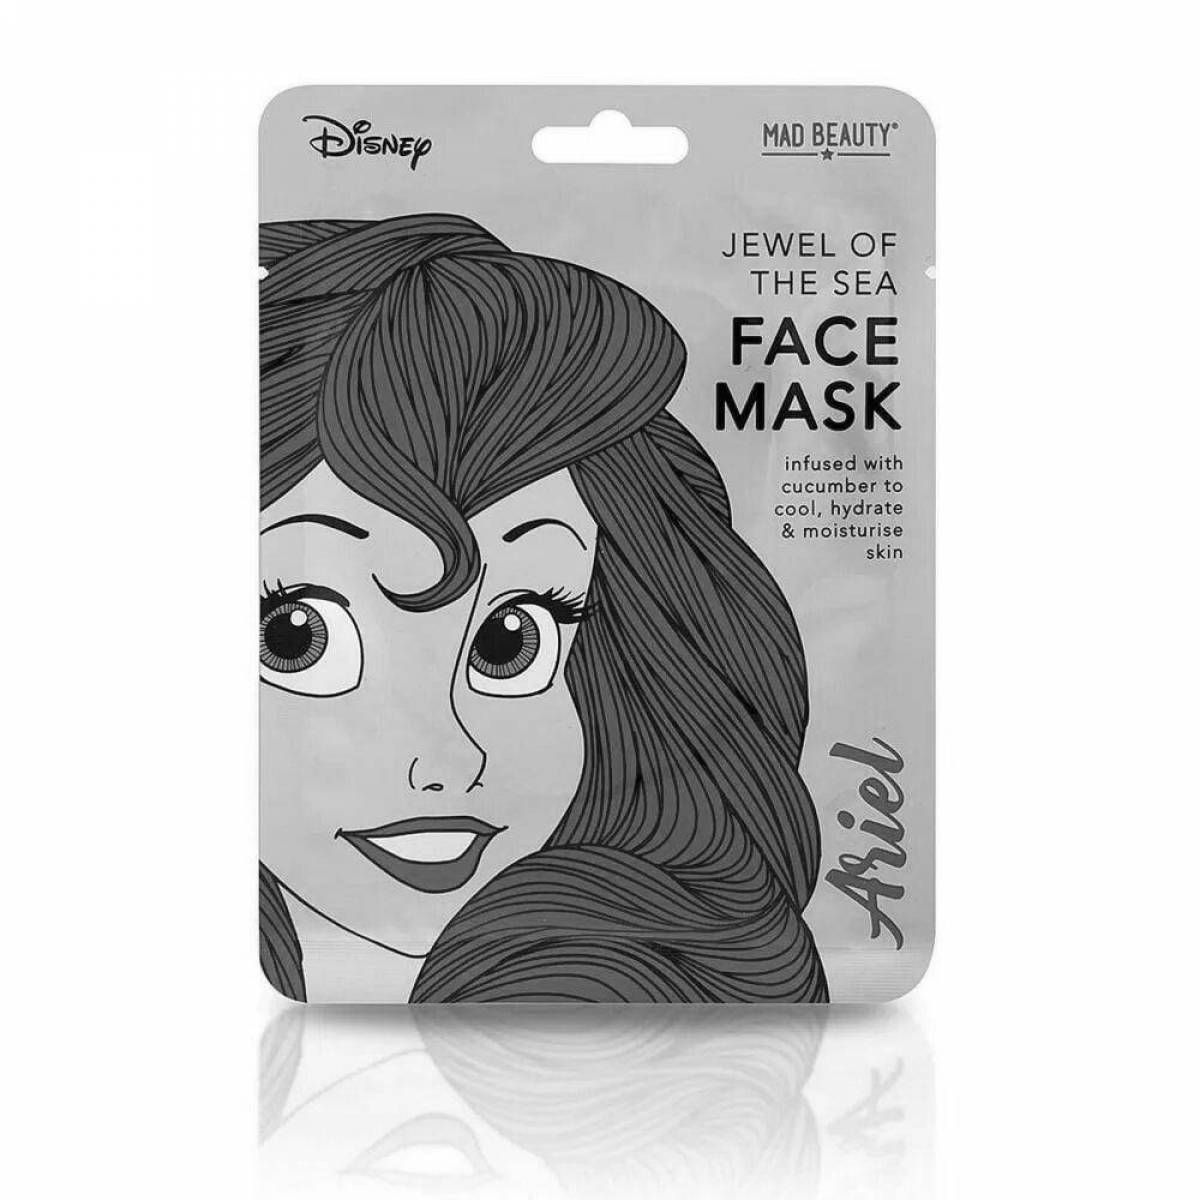 Coloring page refreshing moisturizing face masks